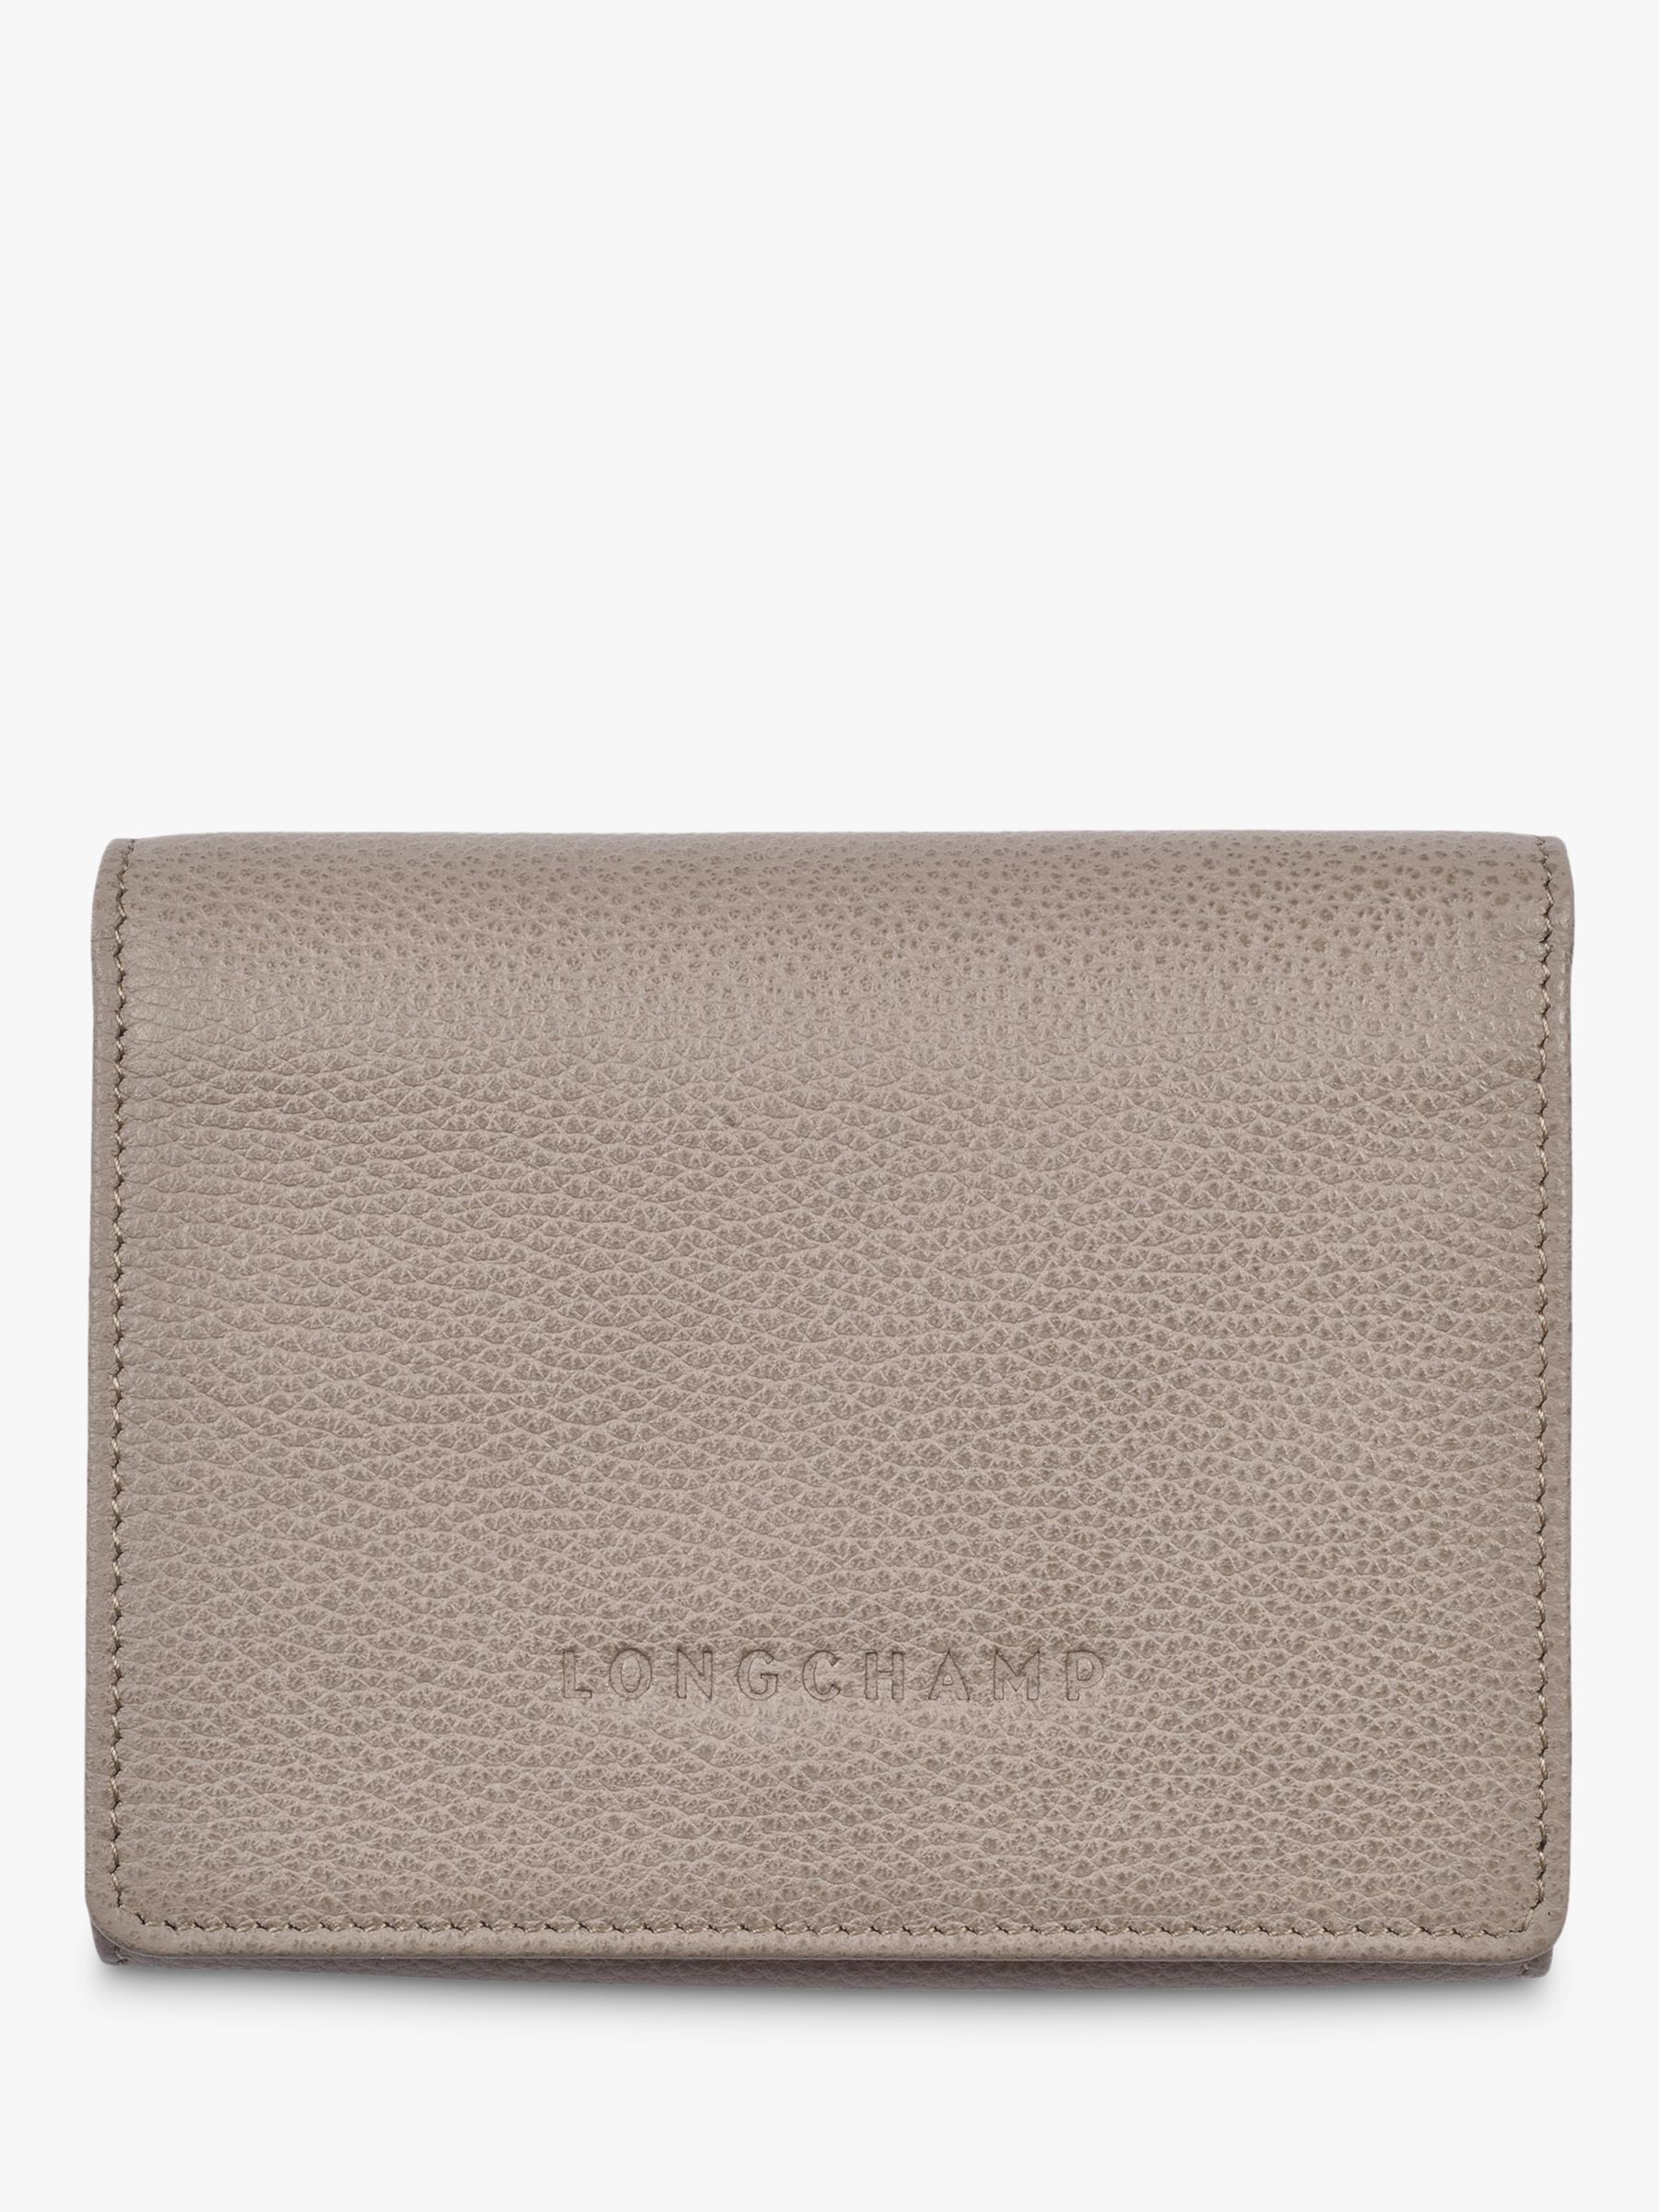 Longchamp Men's Wallets